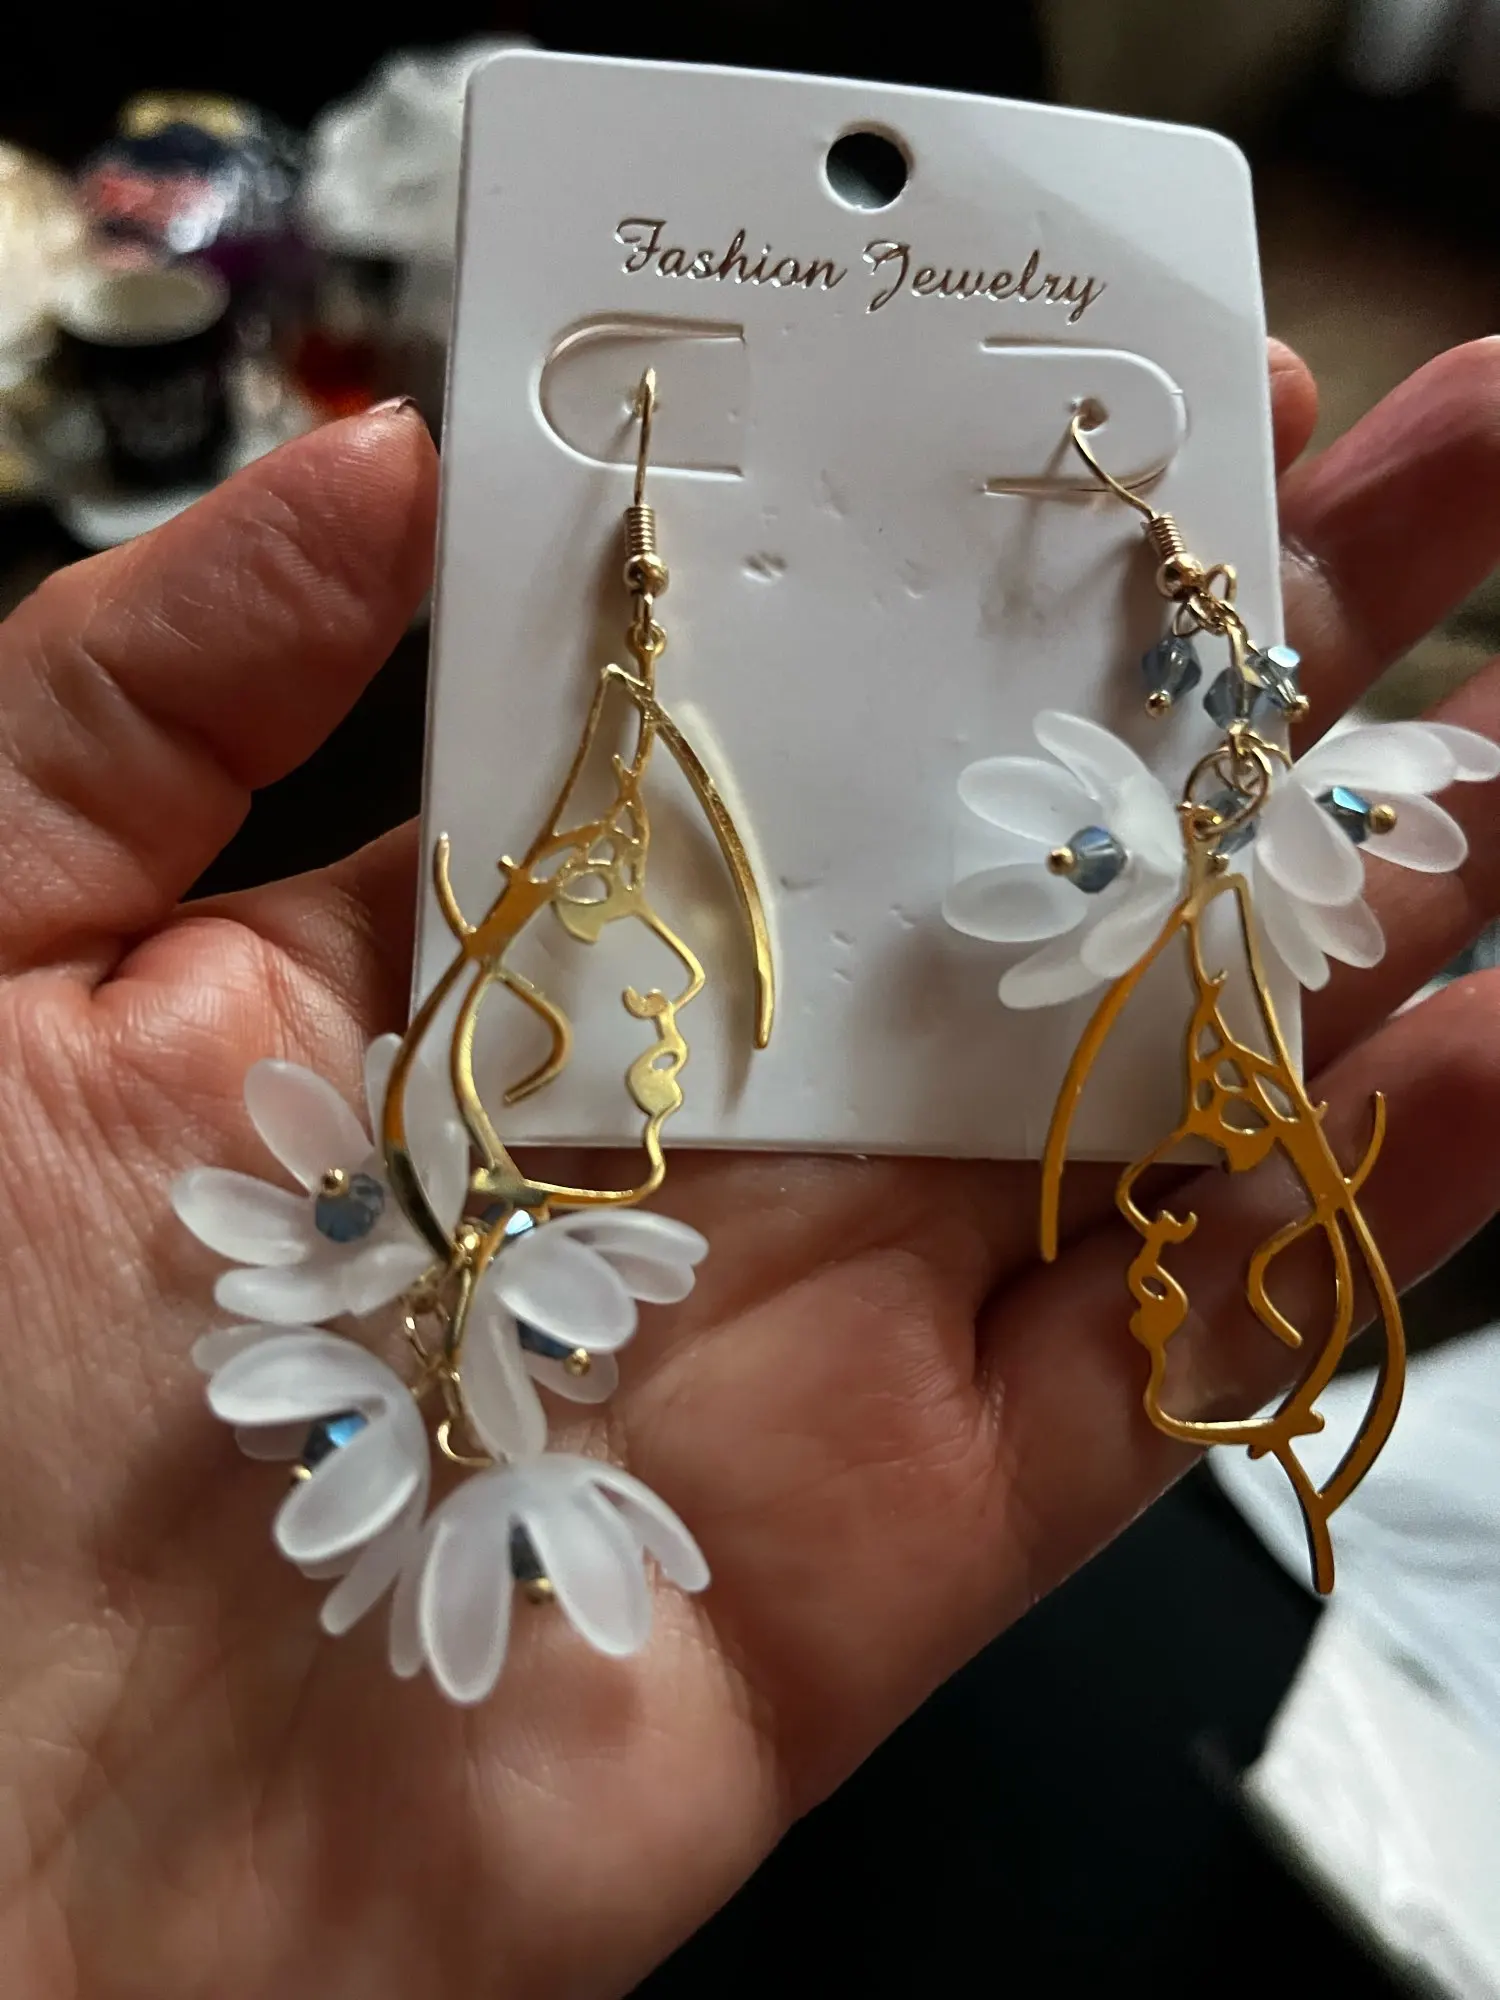 2022 New Flower Bohemia Hanging Earrings Women Fashion Long Tassel Rhinestone Flowers Earring Female Wedding Party Jewelry Gift photo review